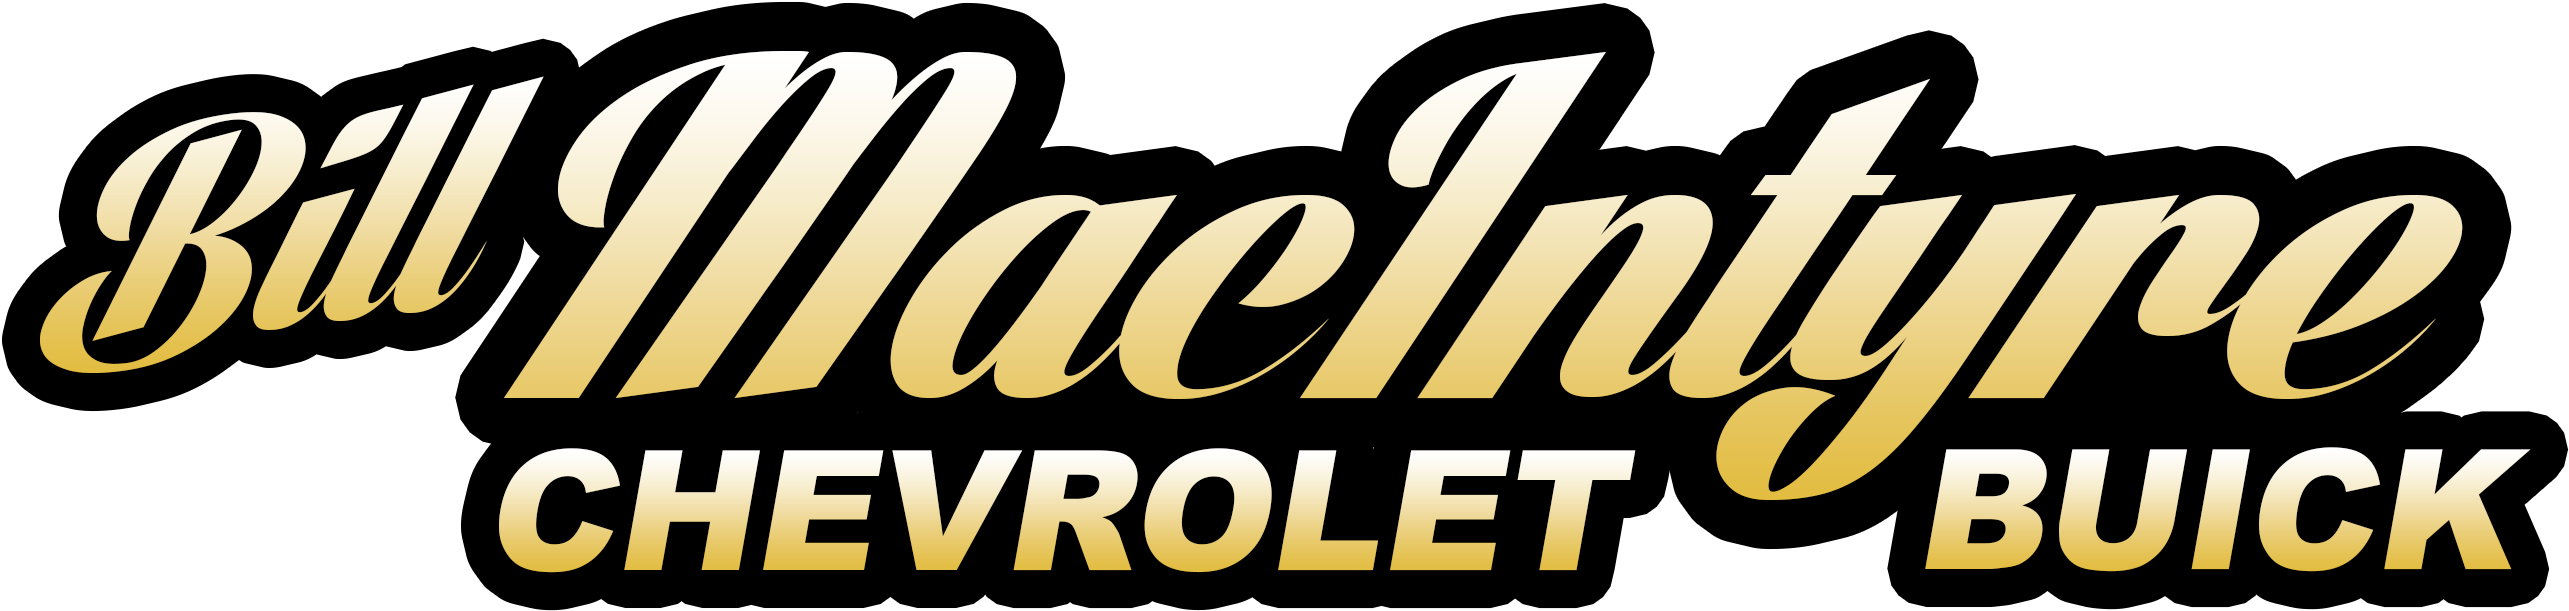 Bill Macintyre Chevrolet Buick (2674x757), Png Download